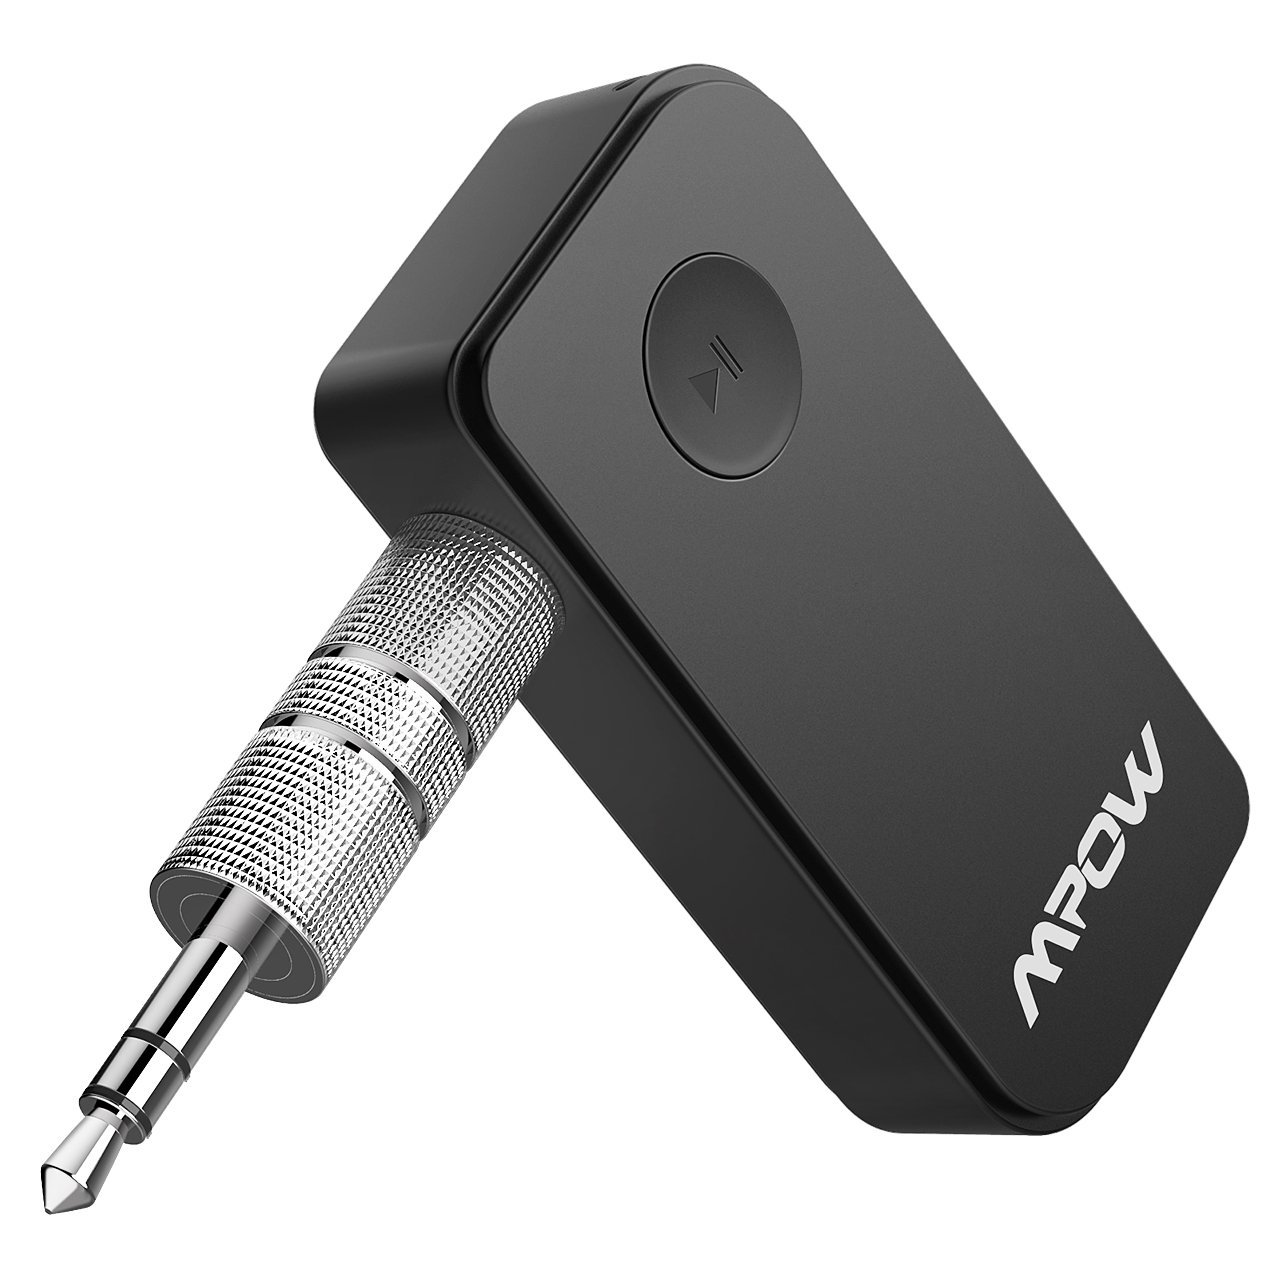 Receptor de Bluetooth, adaptador para auto portátil Bluetooth 4.1 y adaptador Bluetooth de audio AUX para Streaming de música, sistema de sonido, manos libres, sistemas inalámbricos para auto.